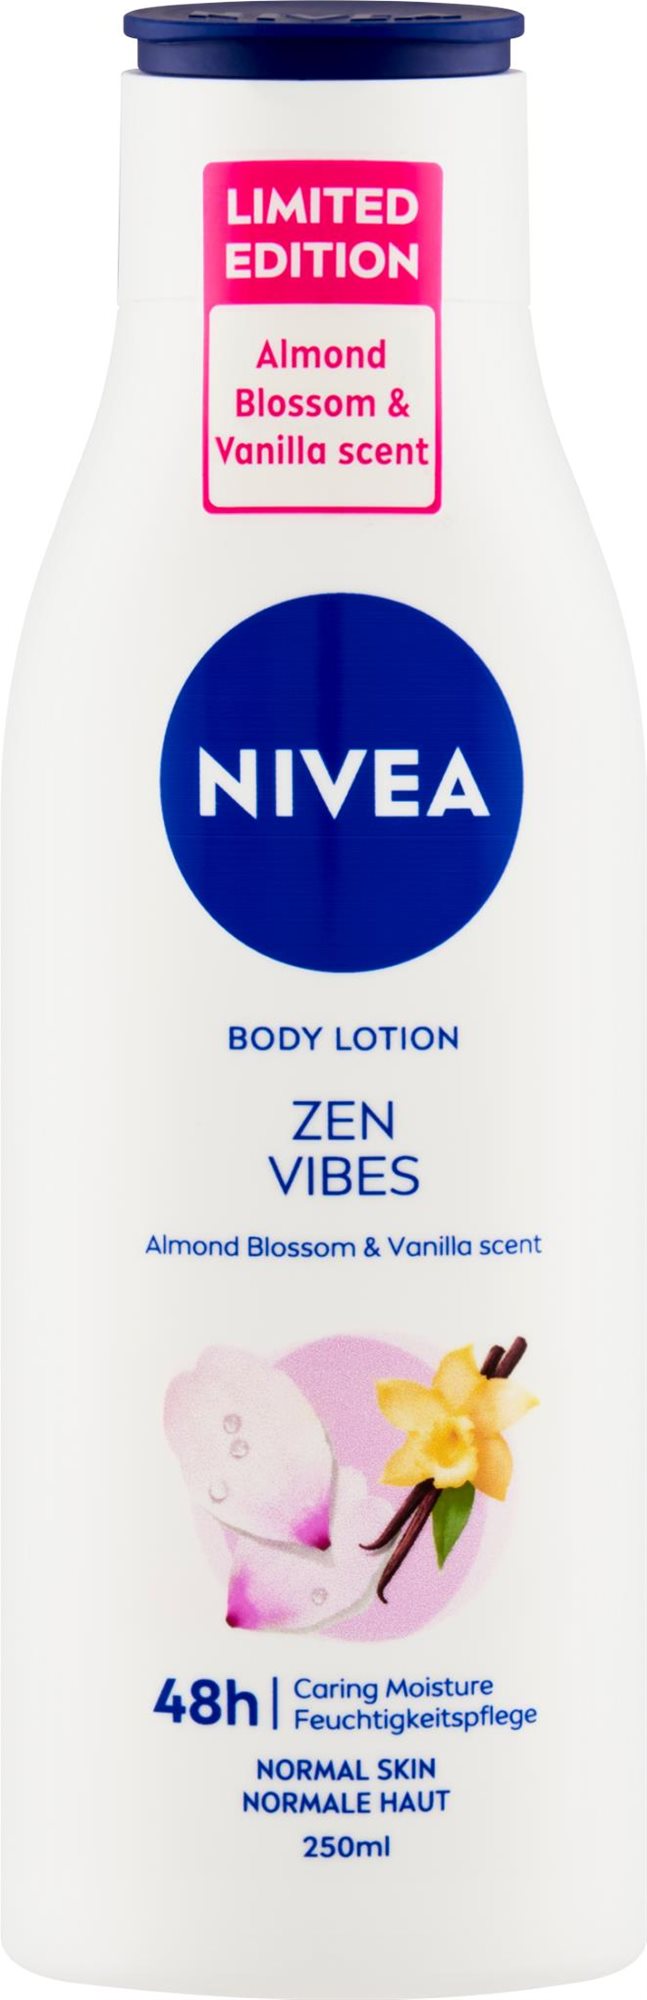 NIVEA Body Lotion Zen Vibes 250 ml